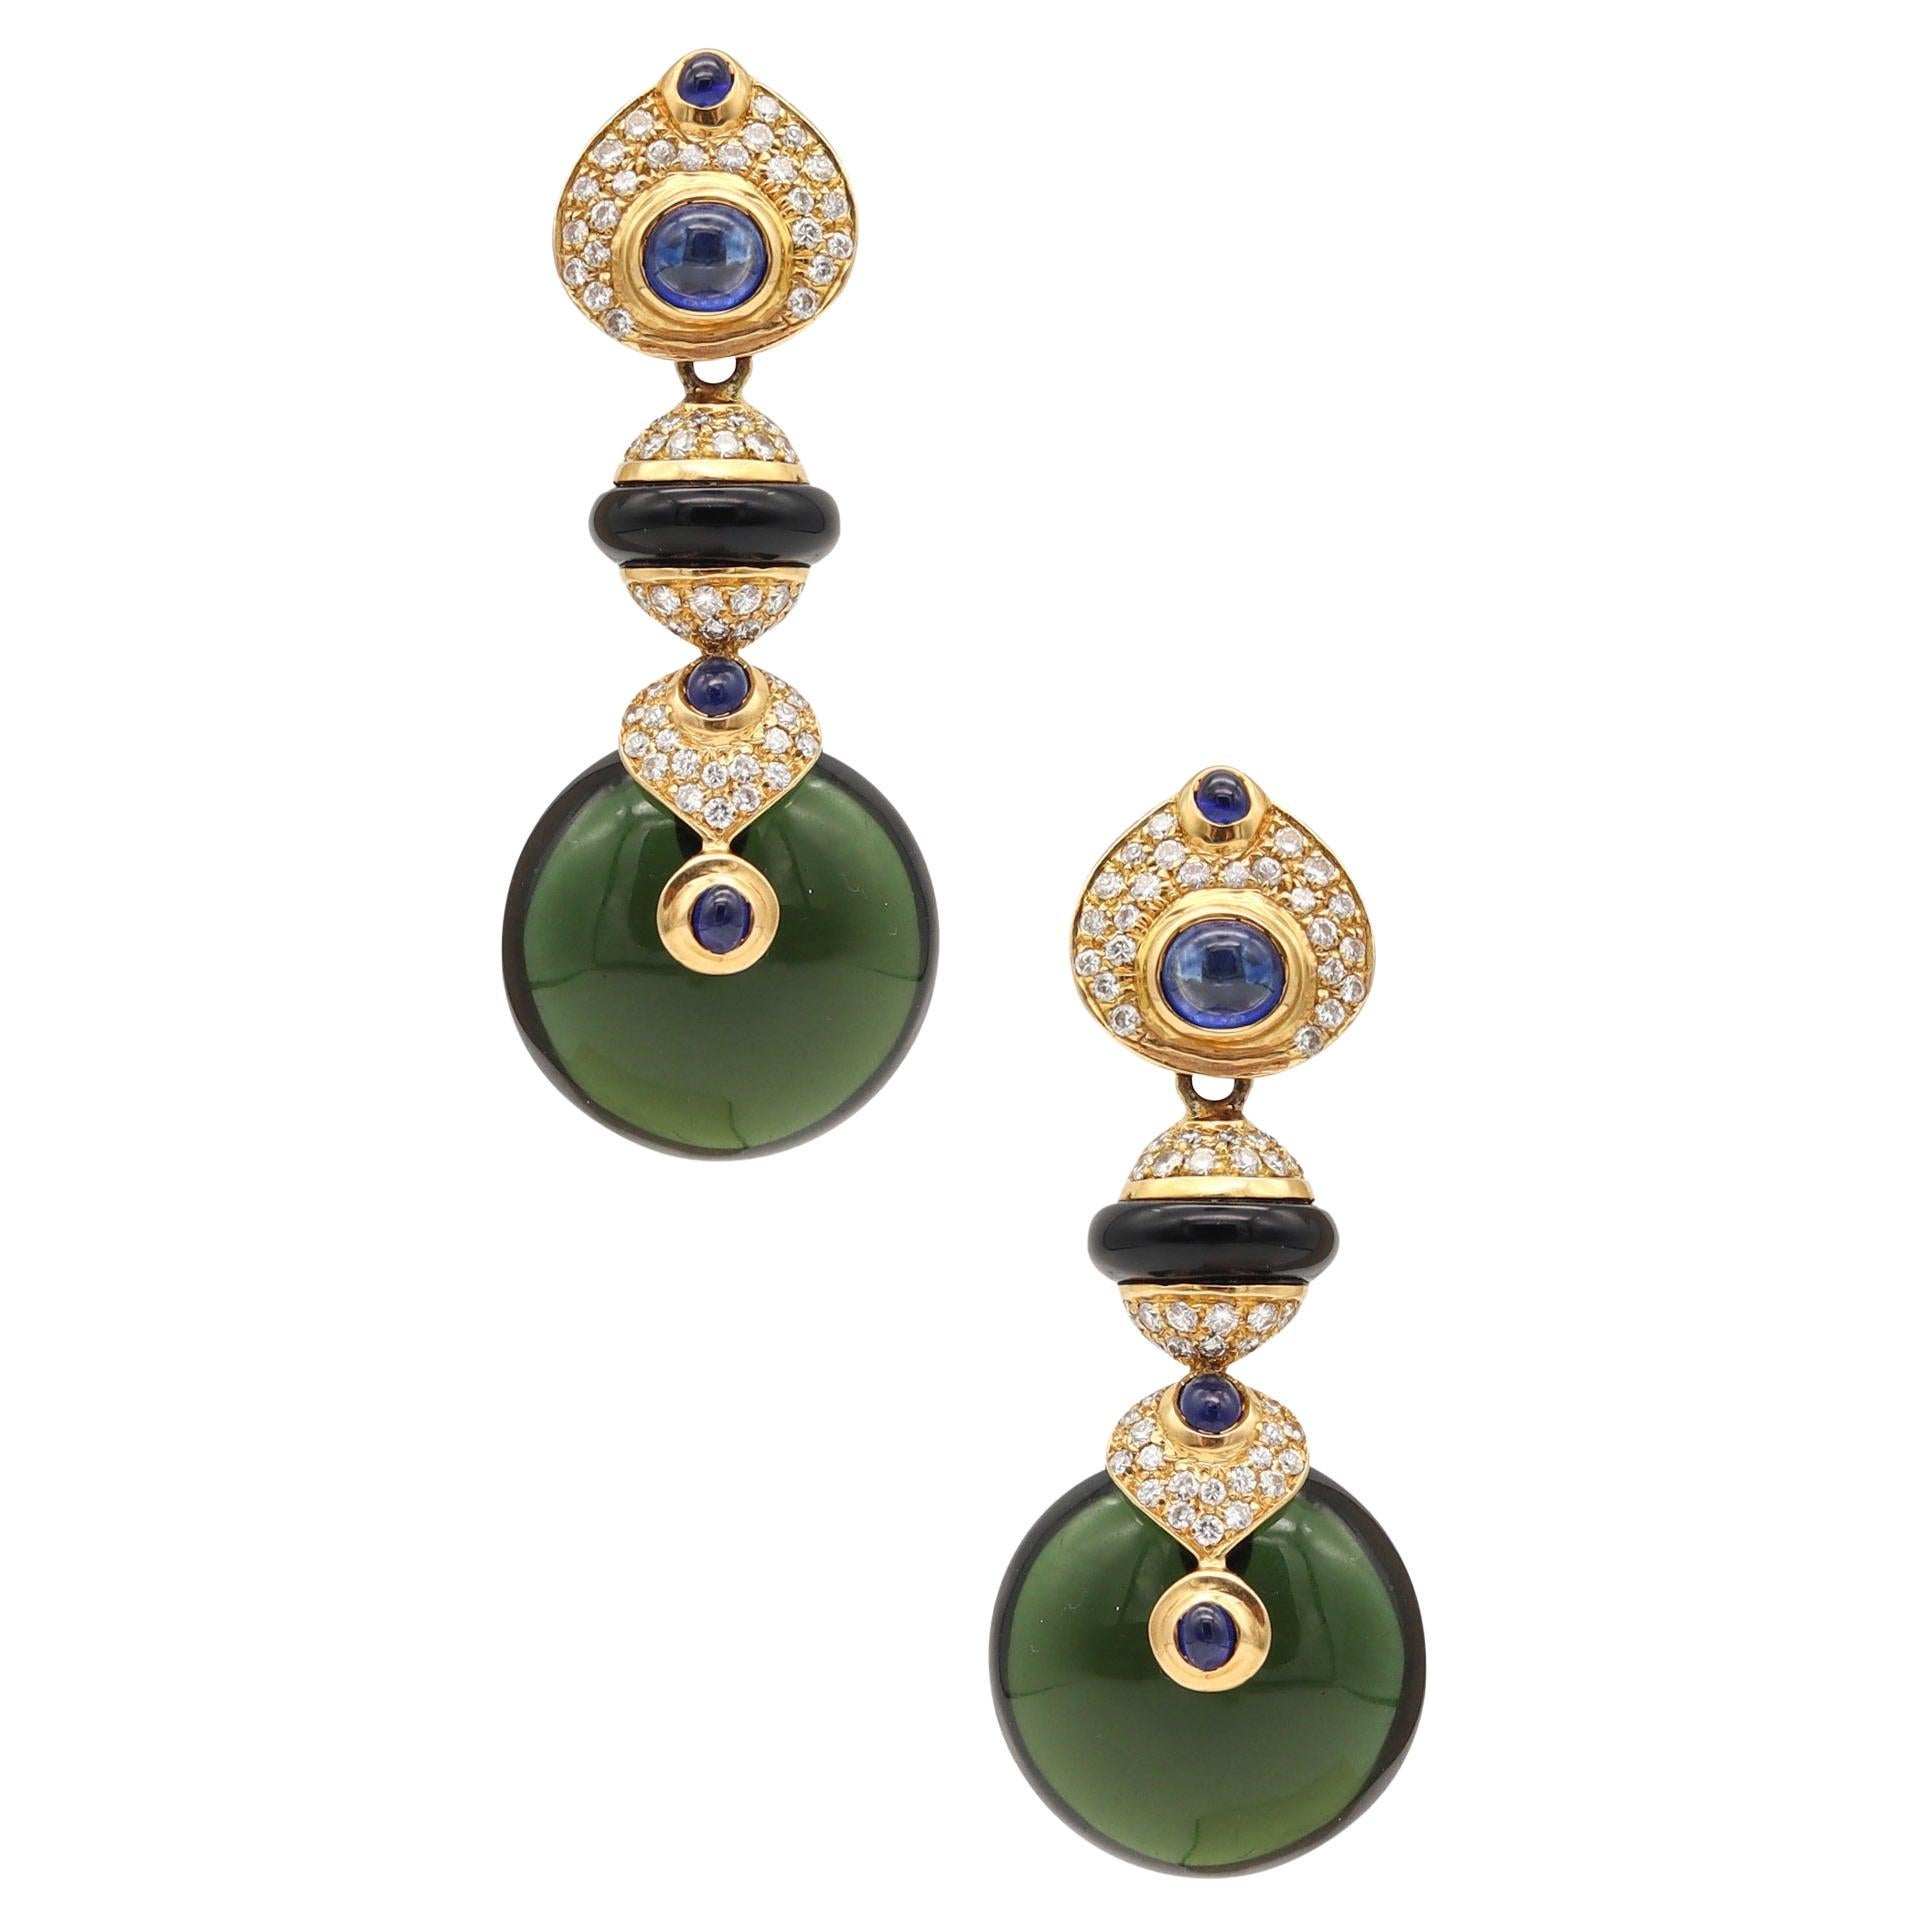 Contemporary Italian Pneus Drop Earrings in 18Kt Gold 92.63 Ctw Diamonds & Gems